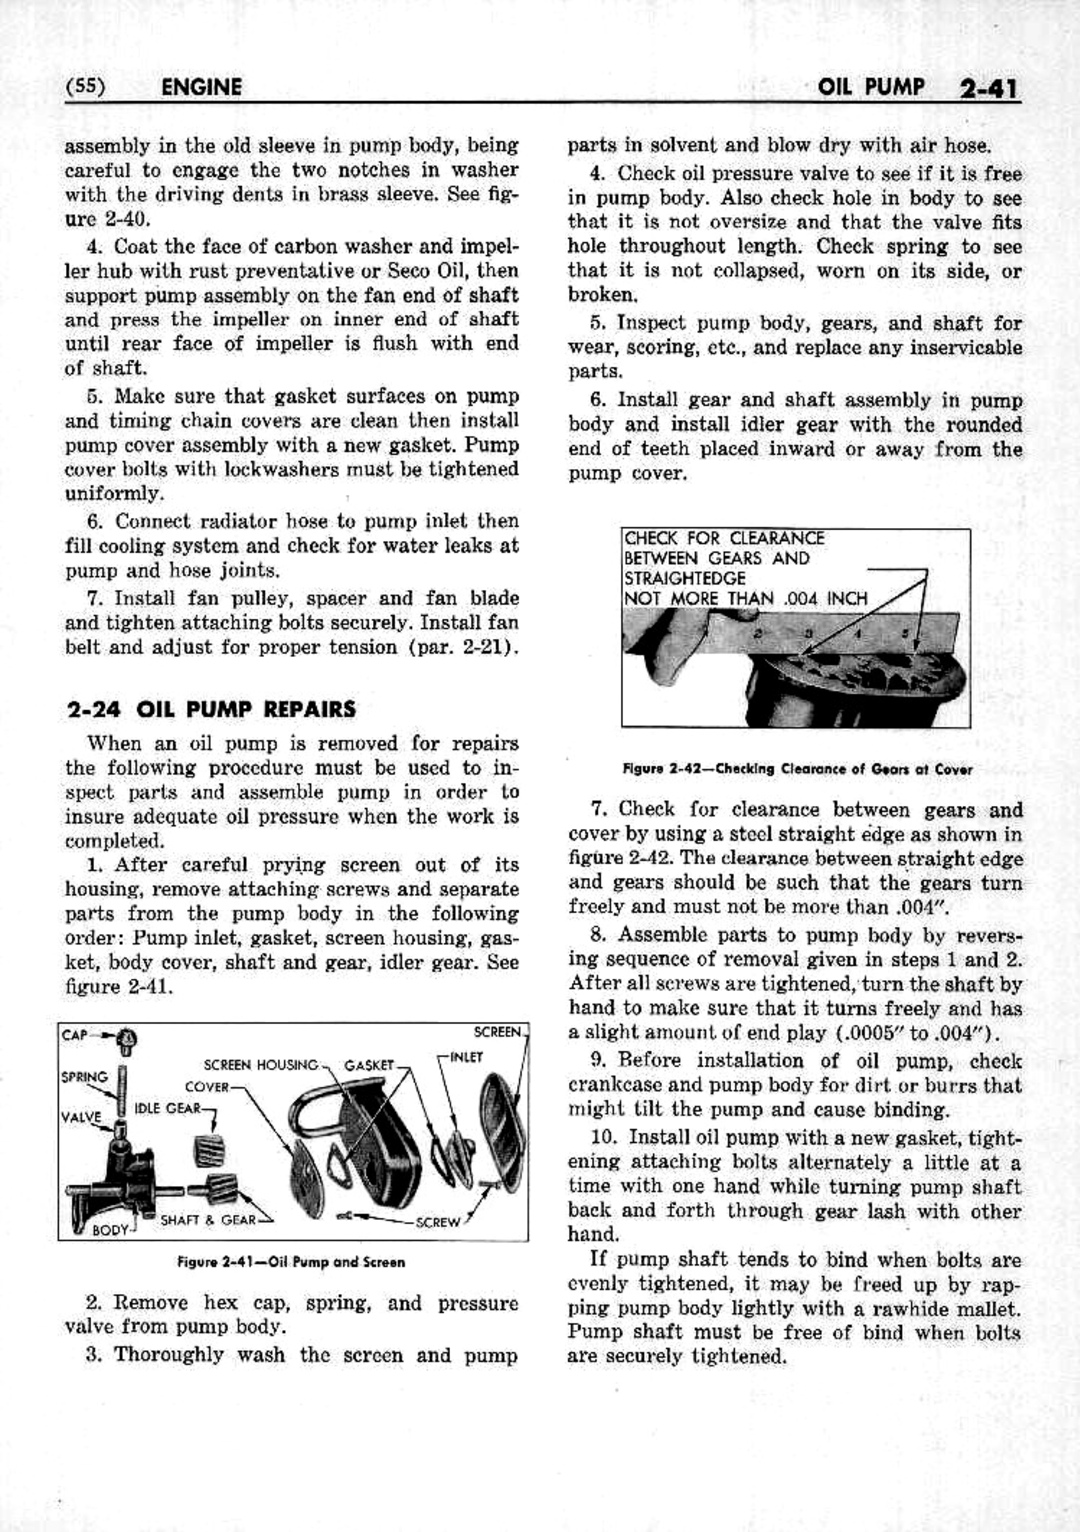 n_03 1953 Buick Shop Manual - Engine-041-041.jpg